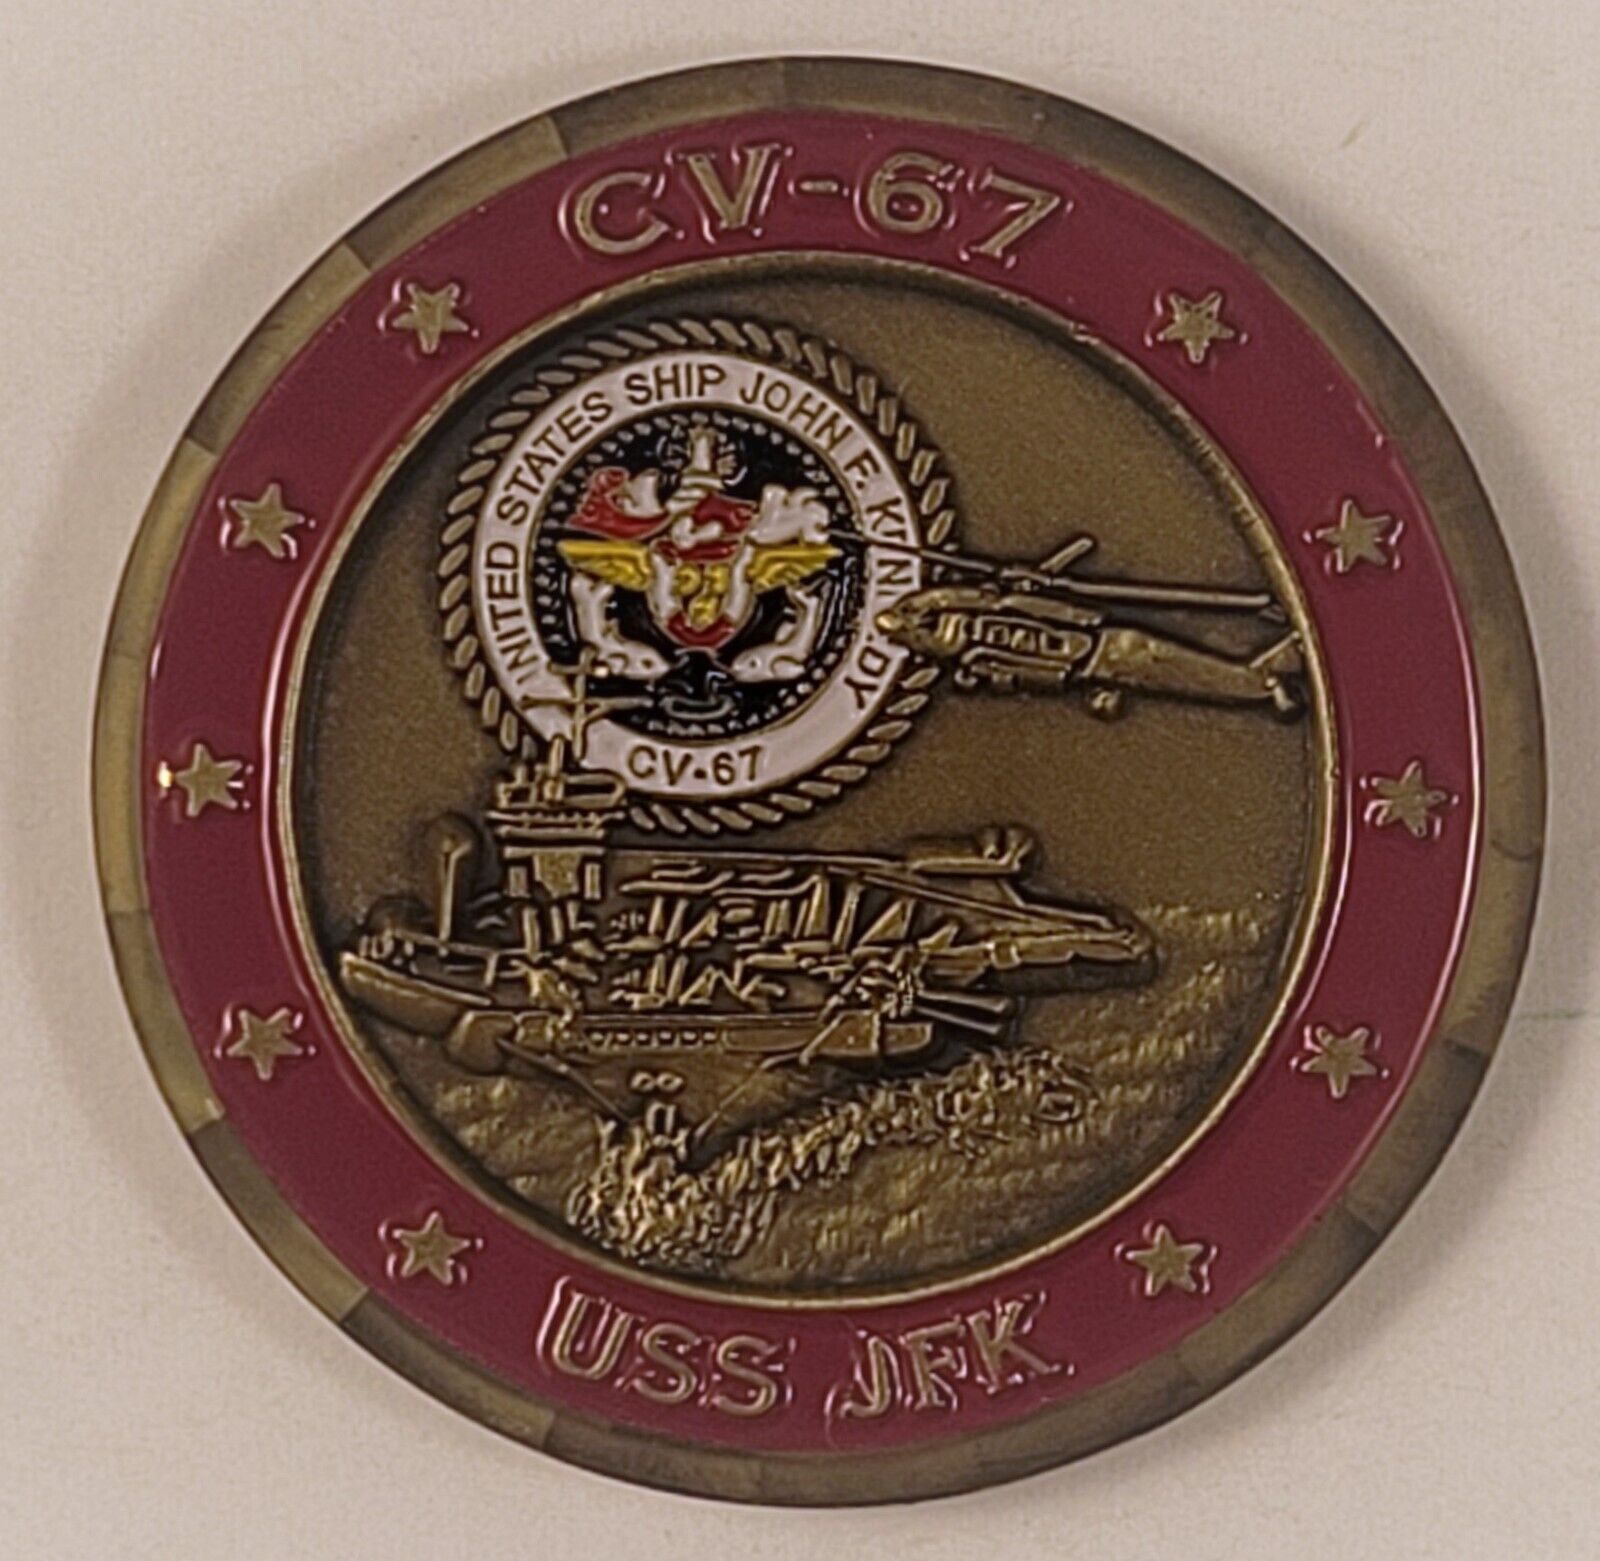 NEW USN -U.S. NAVY -USS JOHN F KENNEDY-  CV-67  - Challenge Coin -Free Shipping